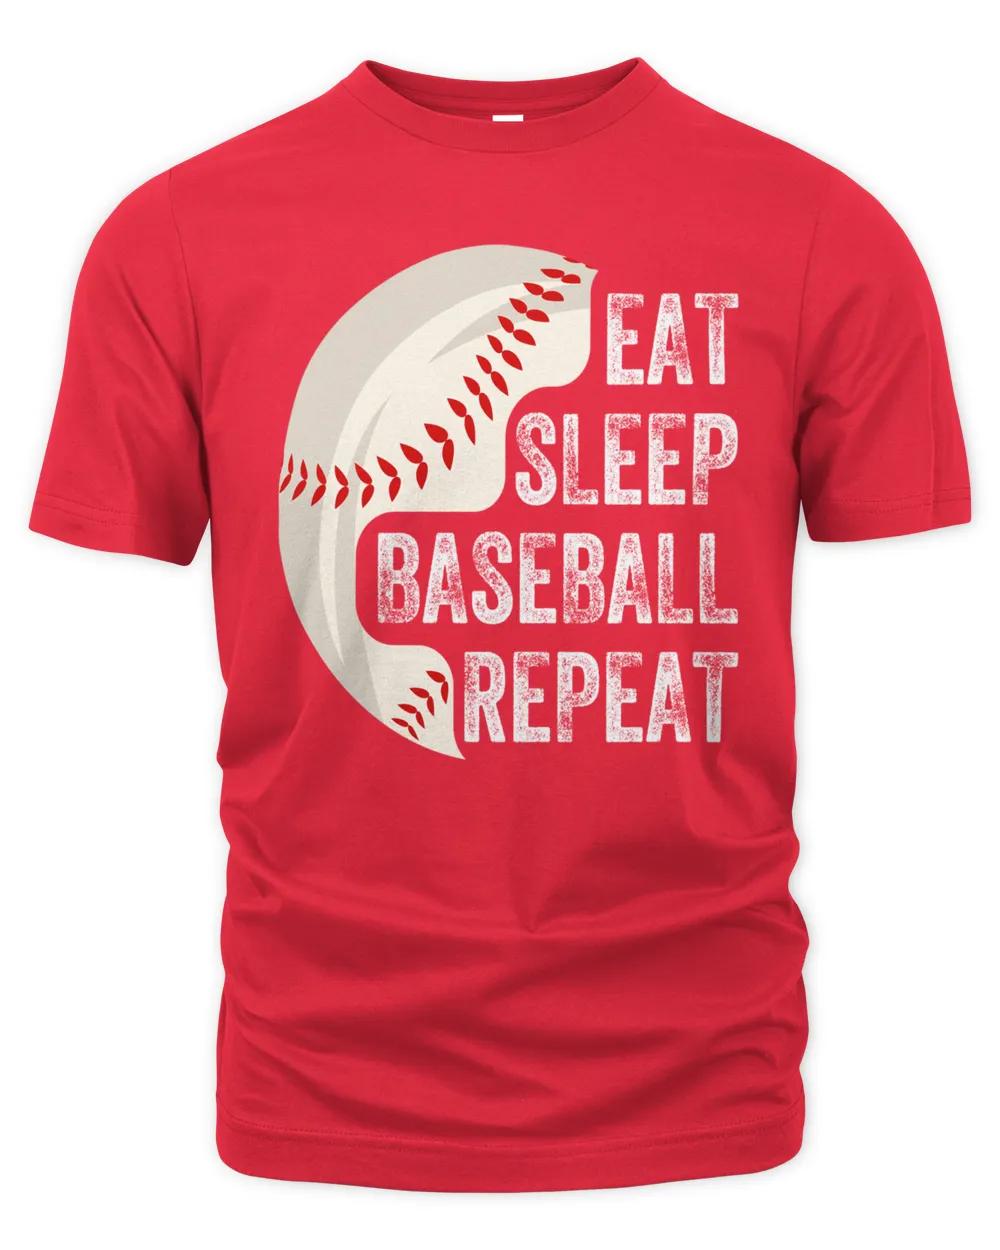 Eat sleep baseball repeat tee